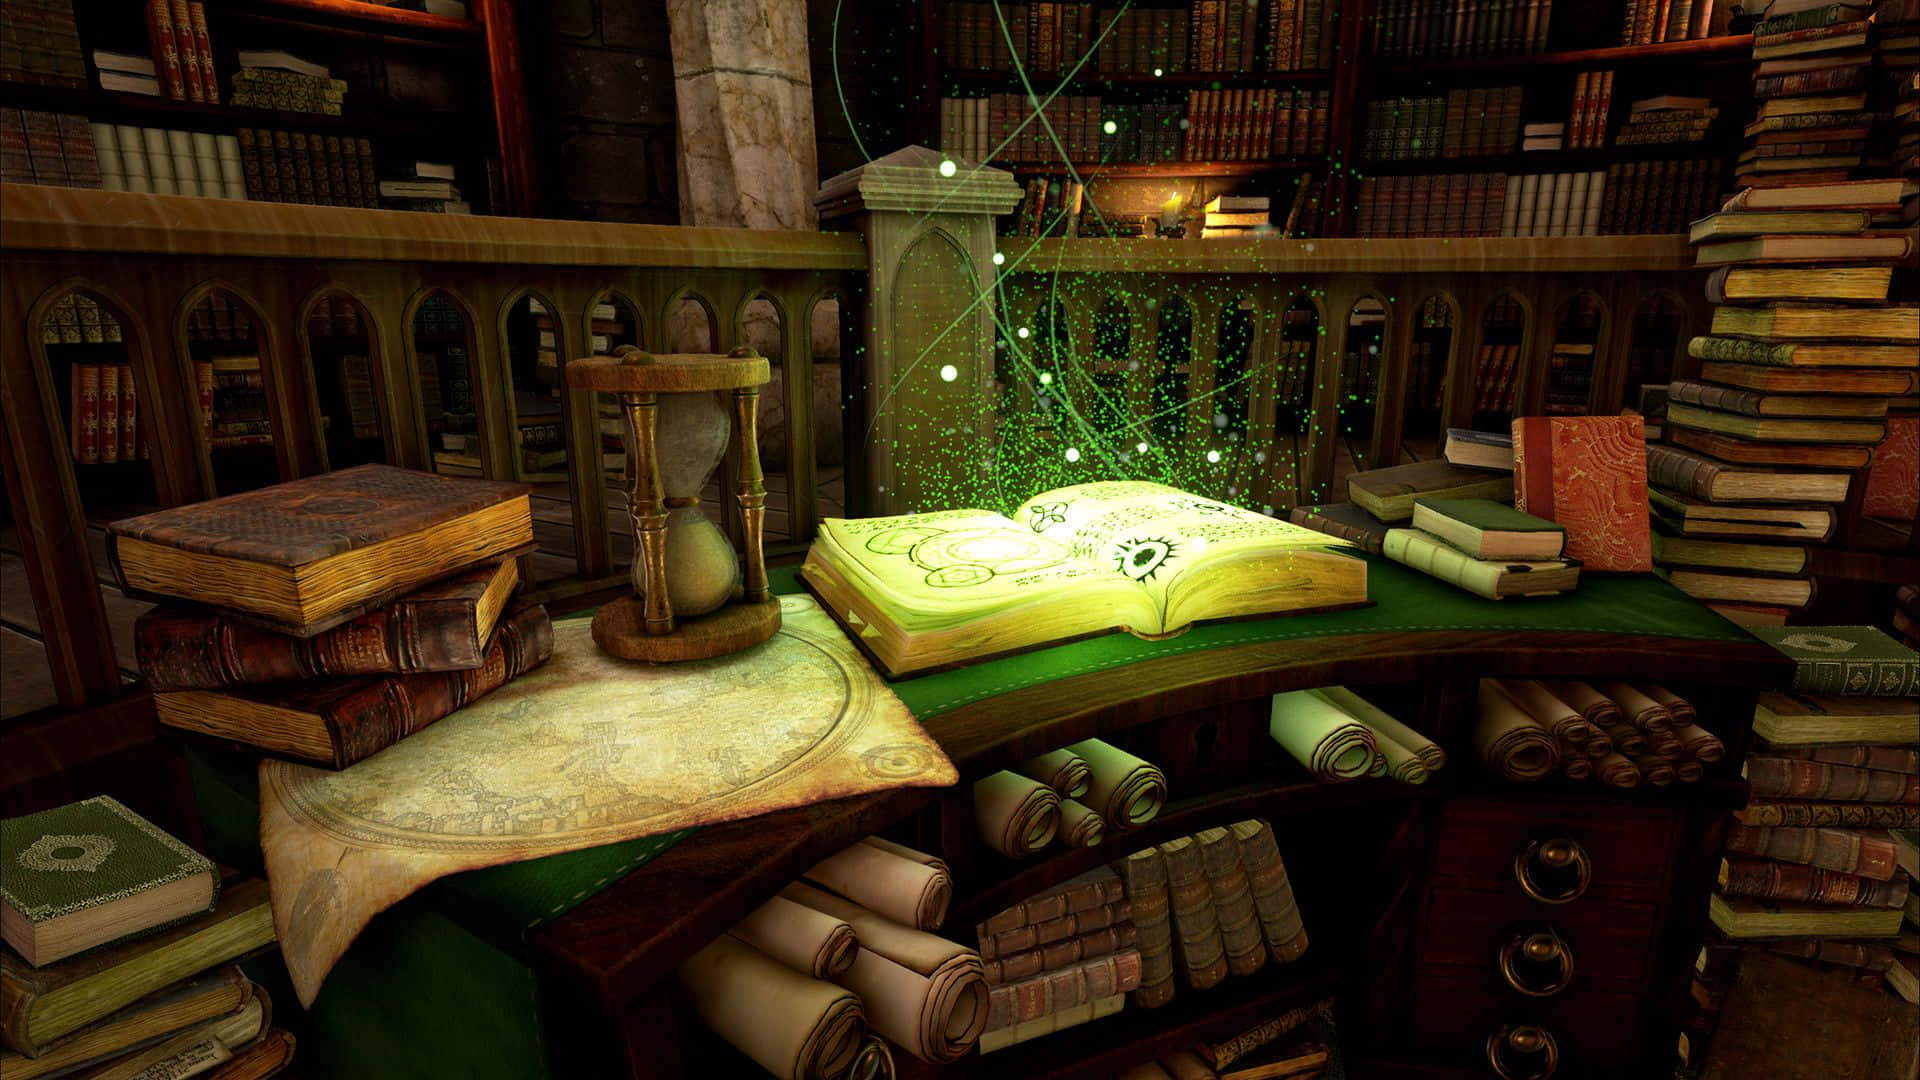 Fantasy Bookshelf Picture